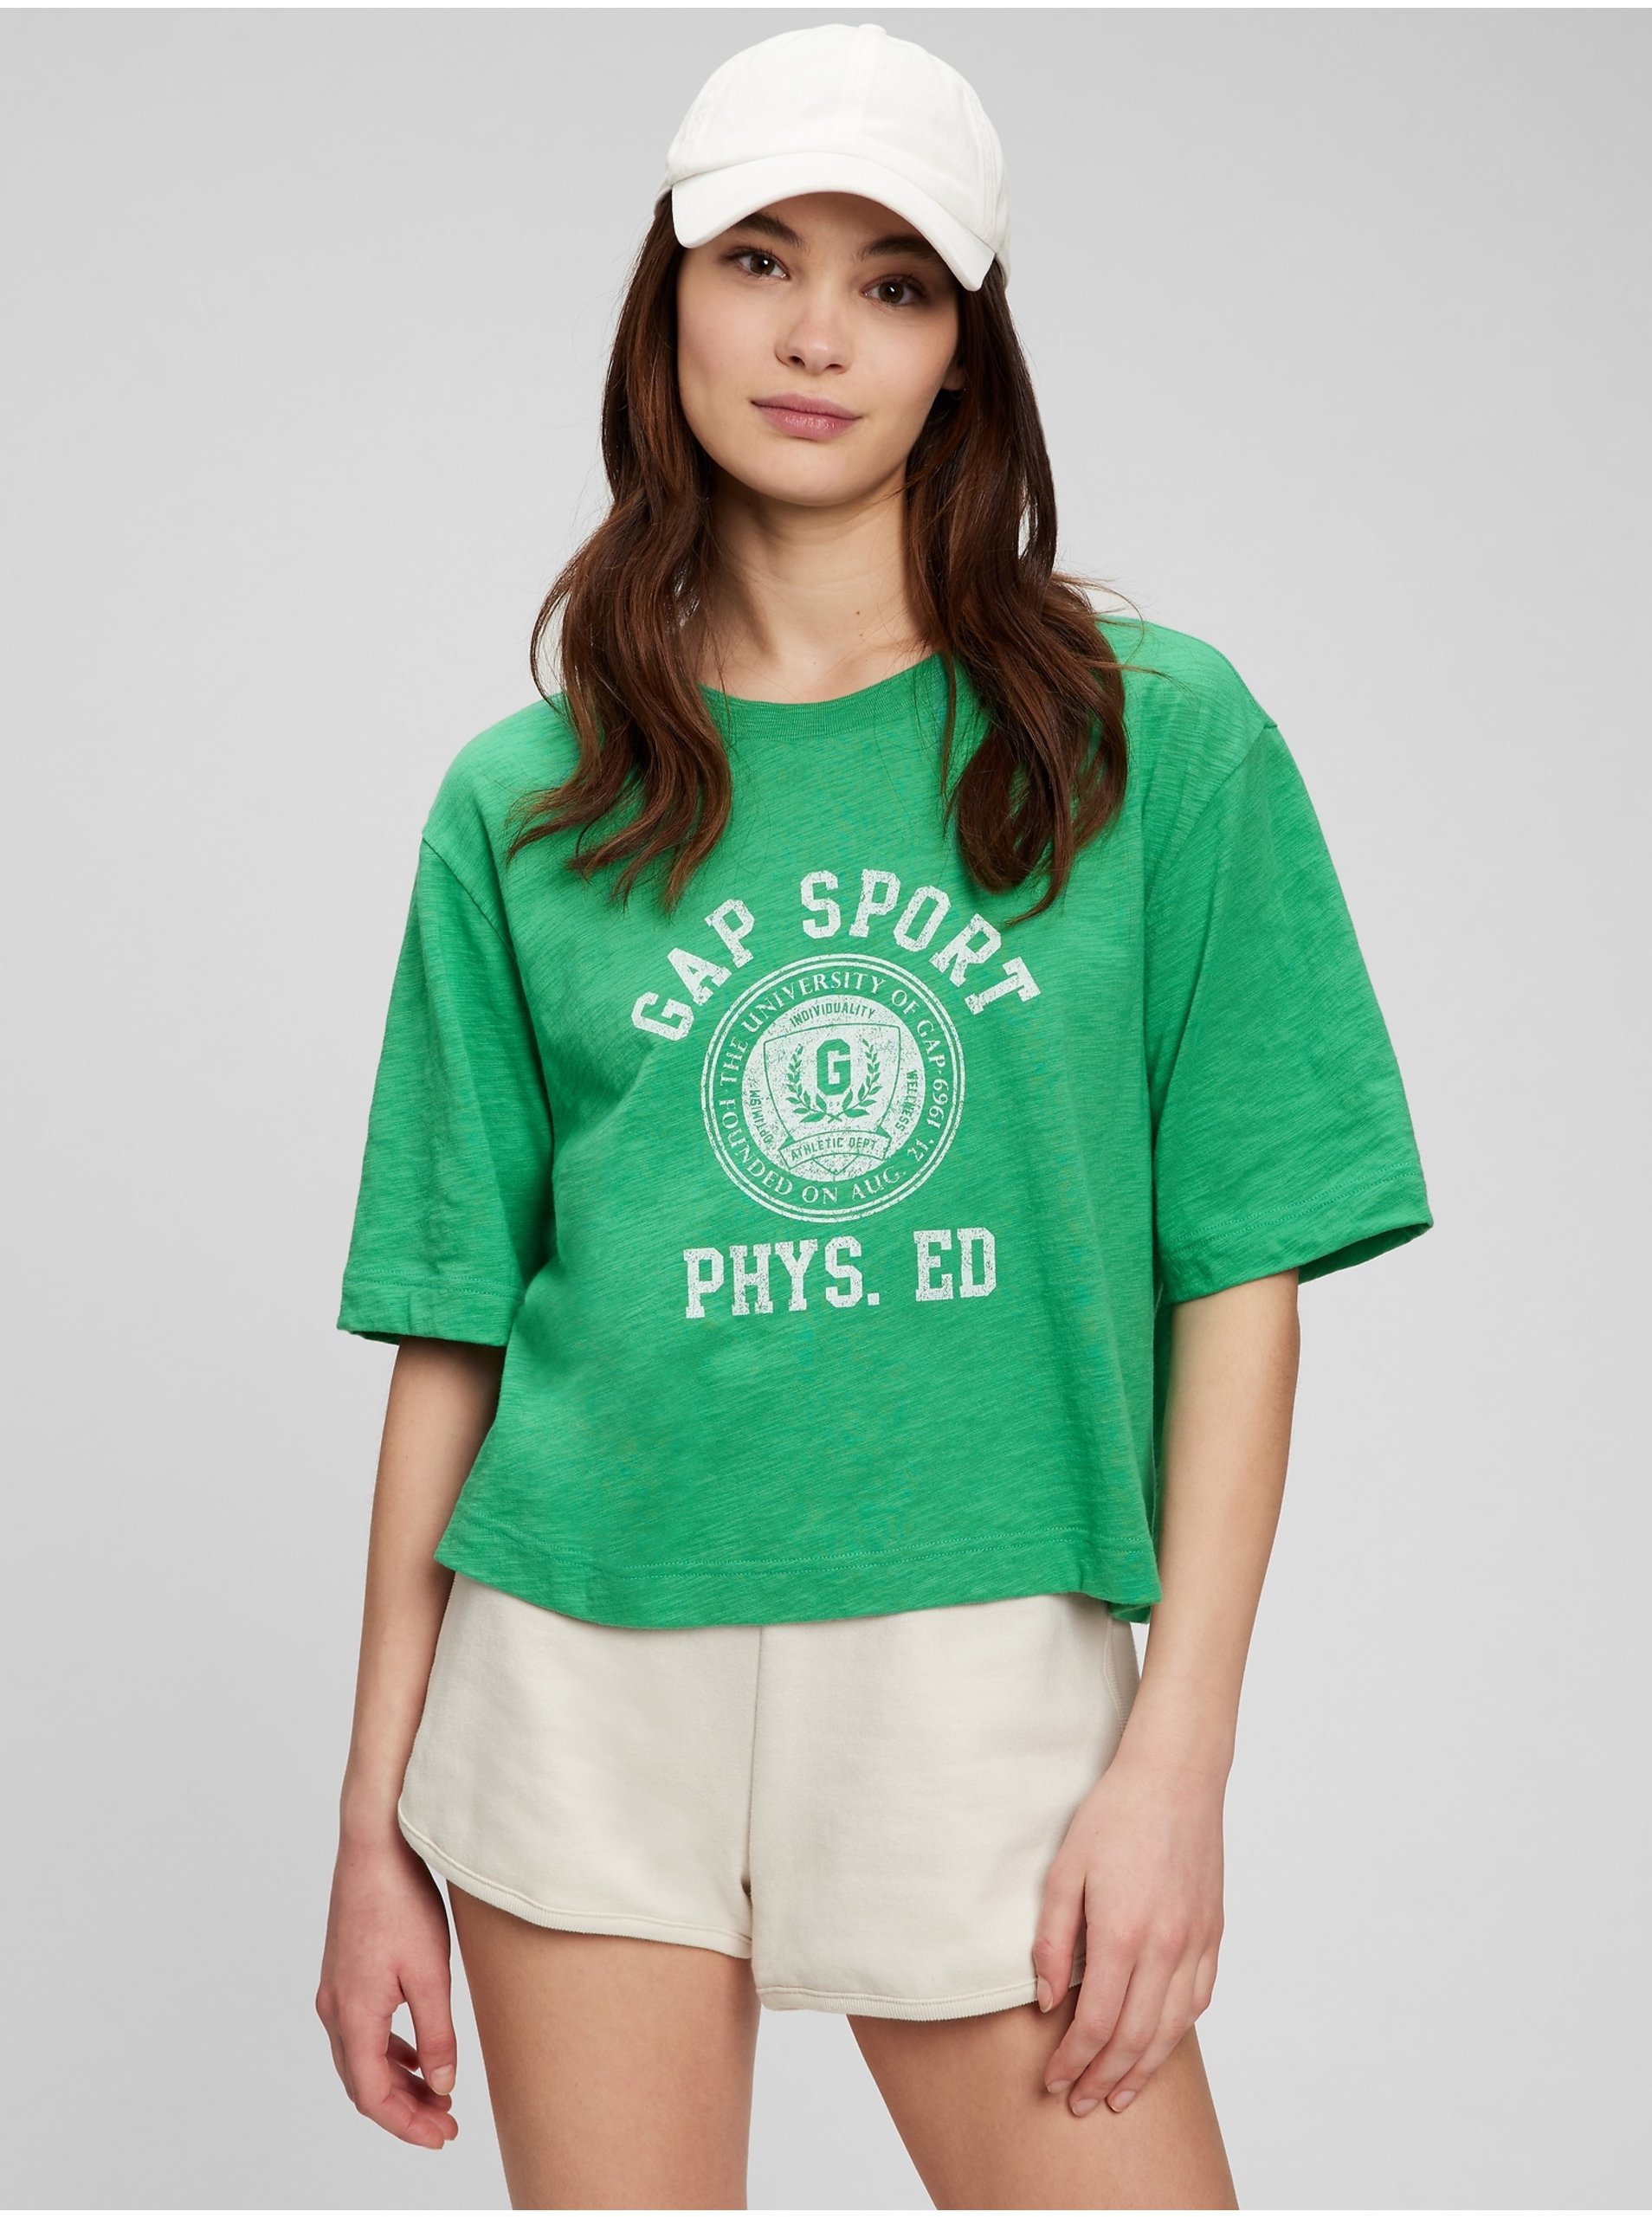 Lacno Zelené dámske tričko GAP logo easy sport